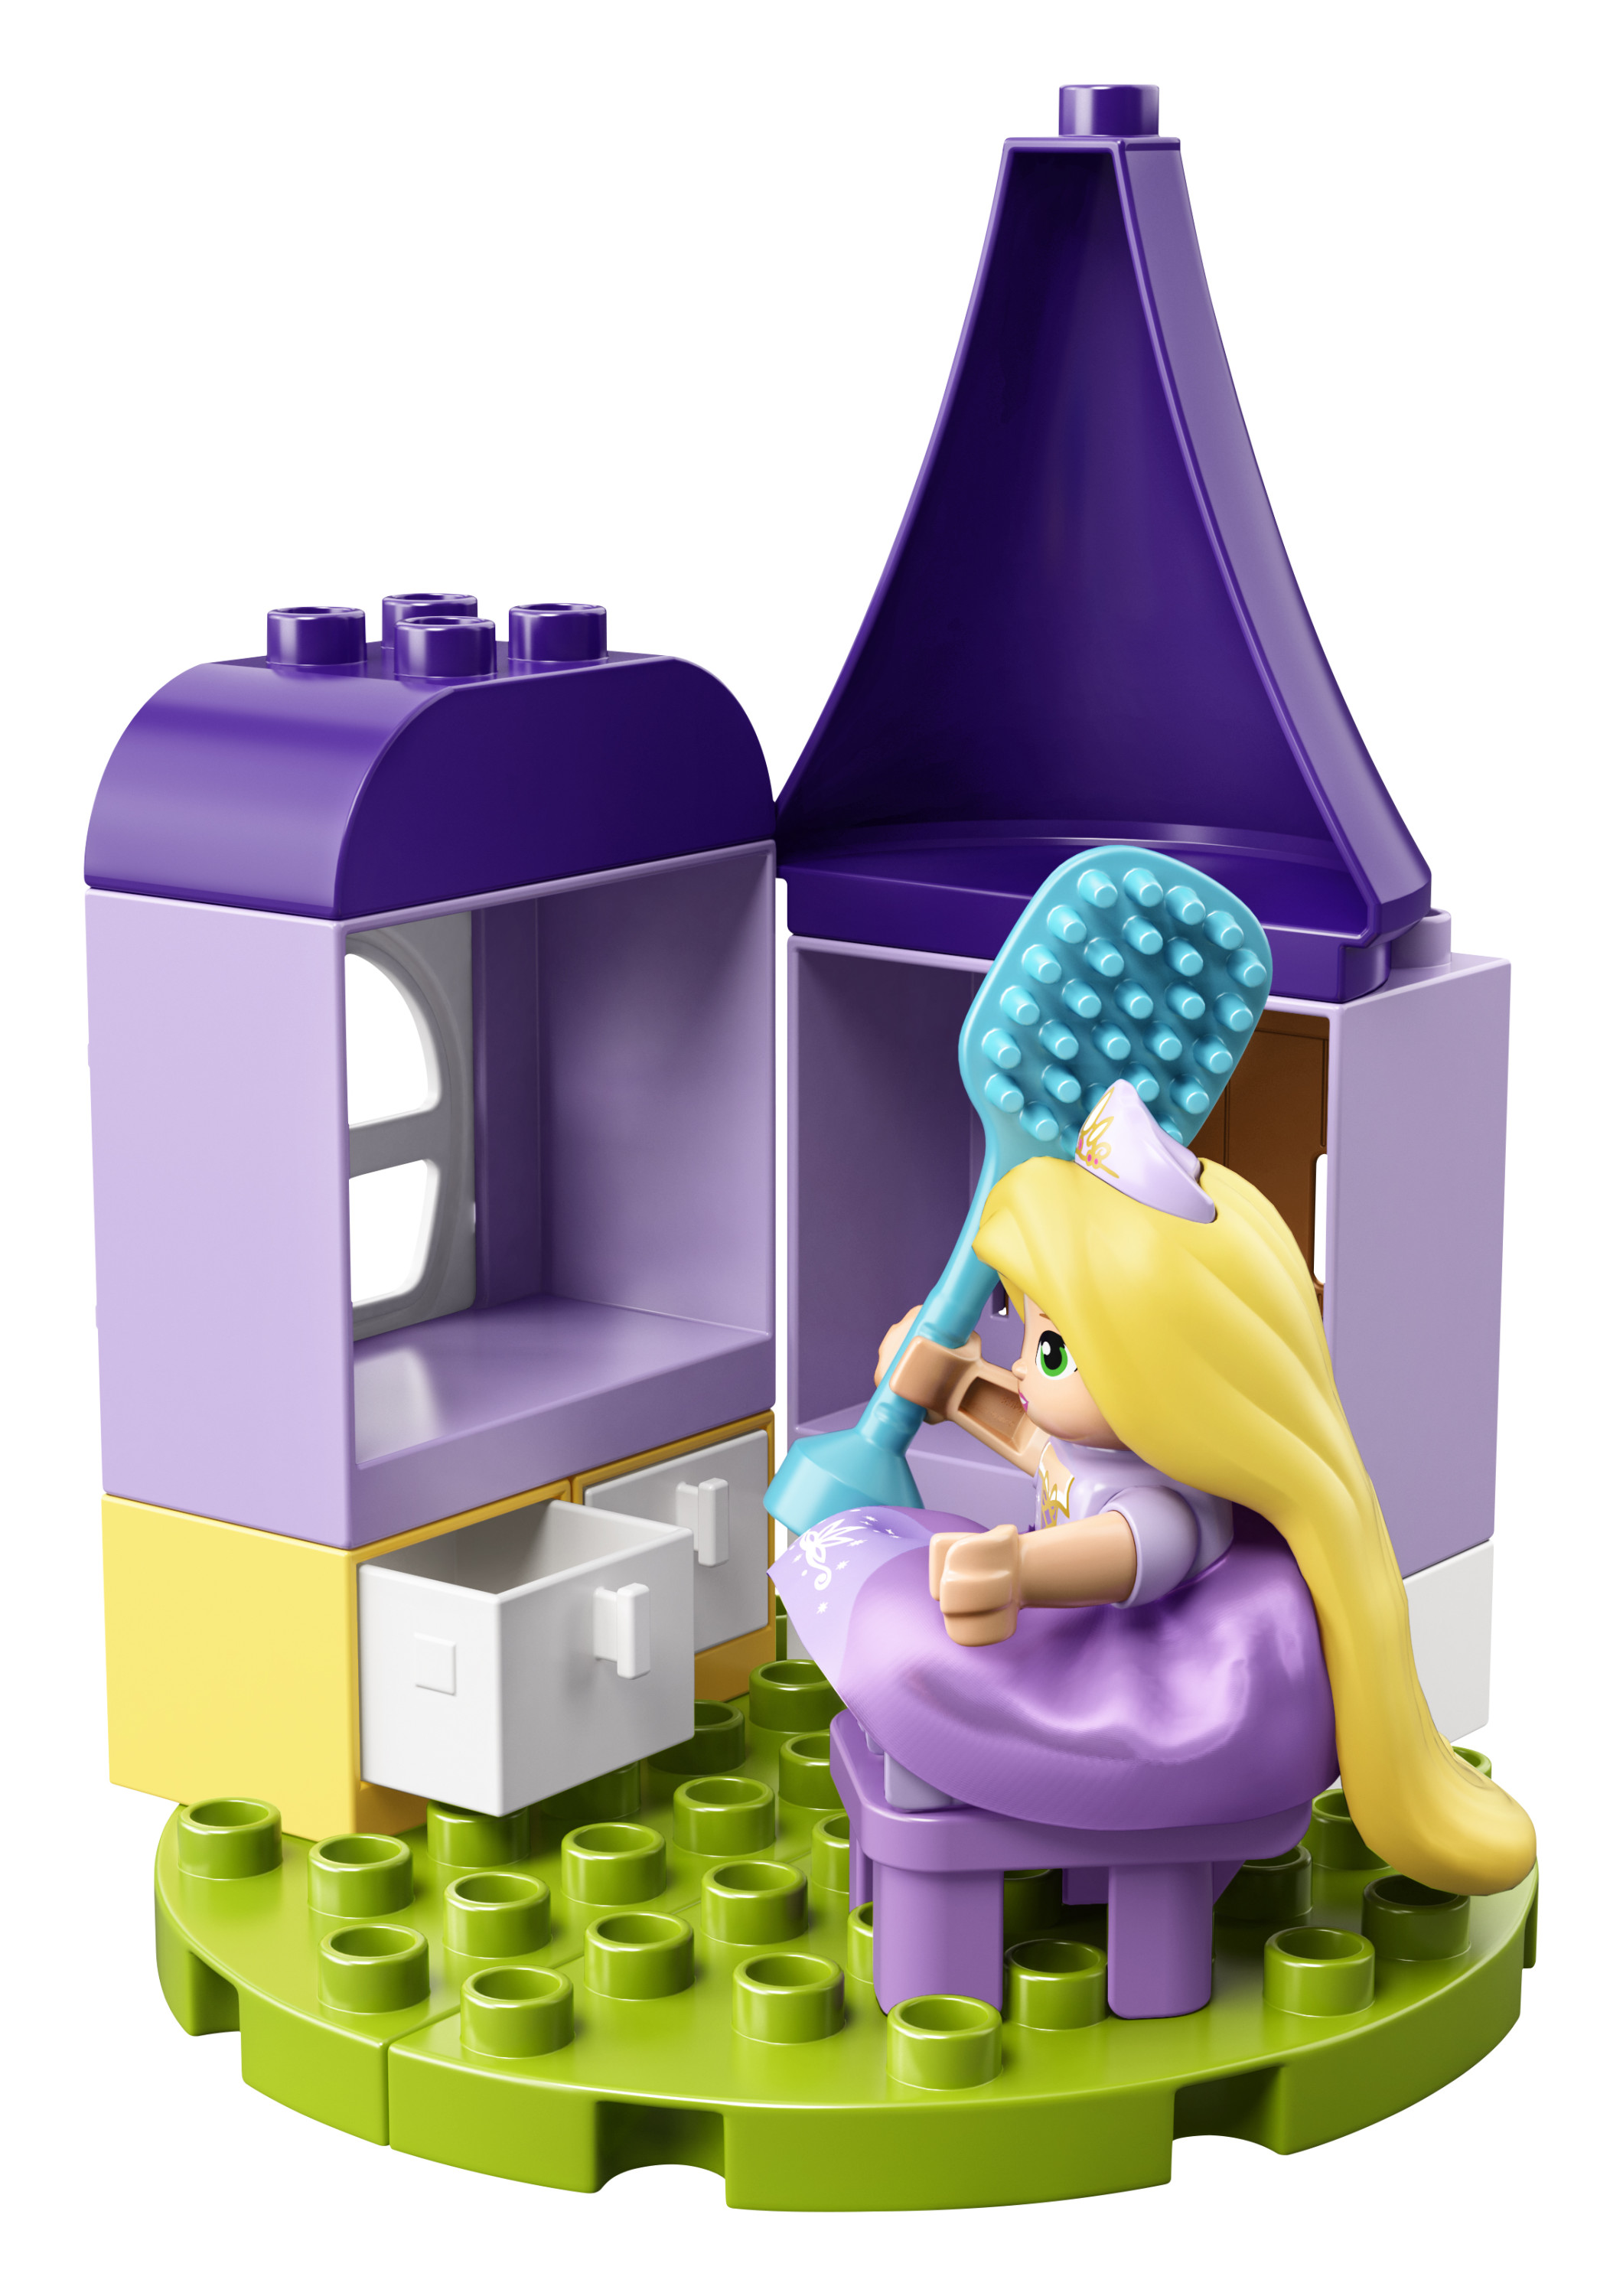 LEGO DUPLO Princess? Rapunzel´s Tower 10878 (37 Pieces) - image 5 of 6